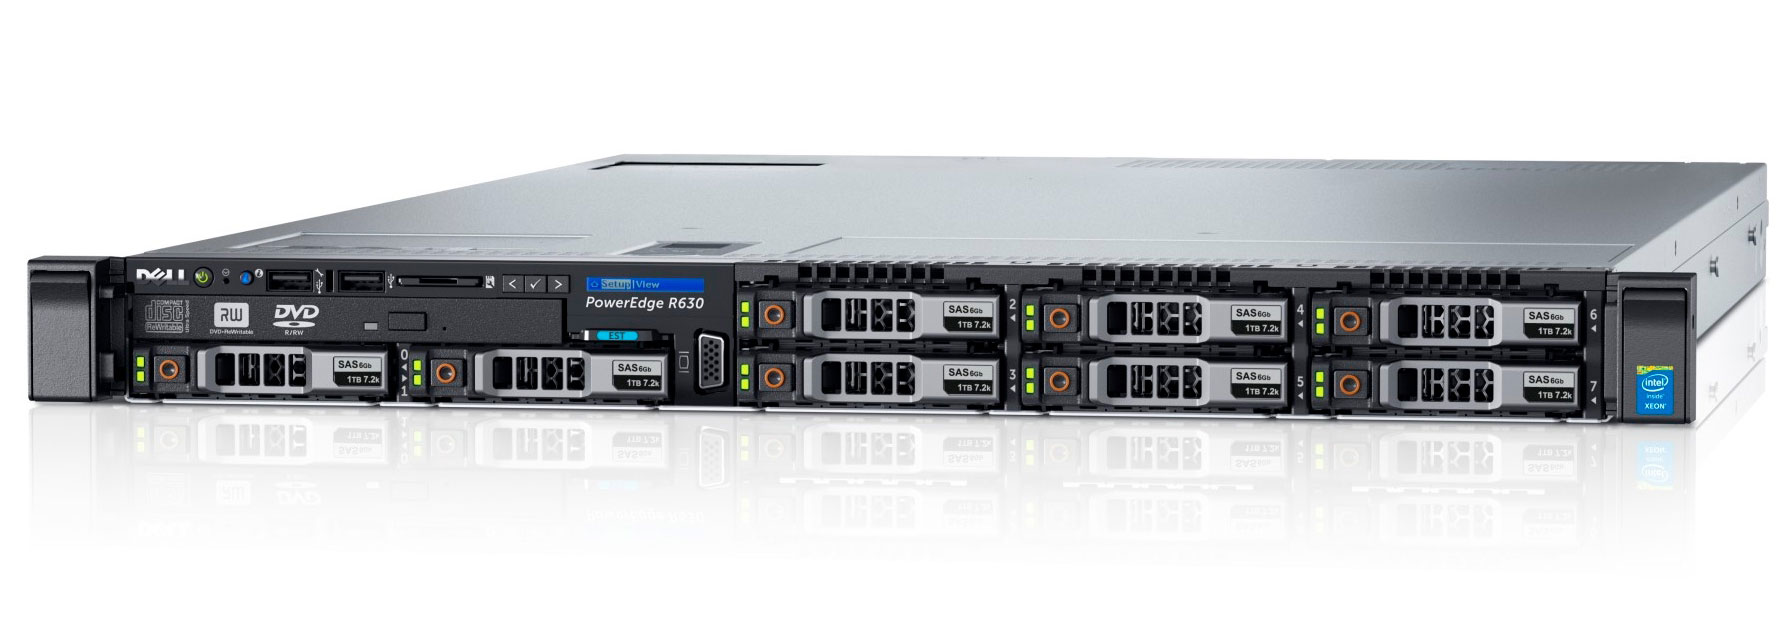 Подробное фото Сервер DELL PowerEdge R630 Xeon 2x E5-2640v3 64Gb 2133P DDR4 8x noHDD 2.5", SAS RAID Perc H730, 1024Mb, DVD, 2*PSU